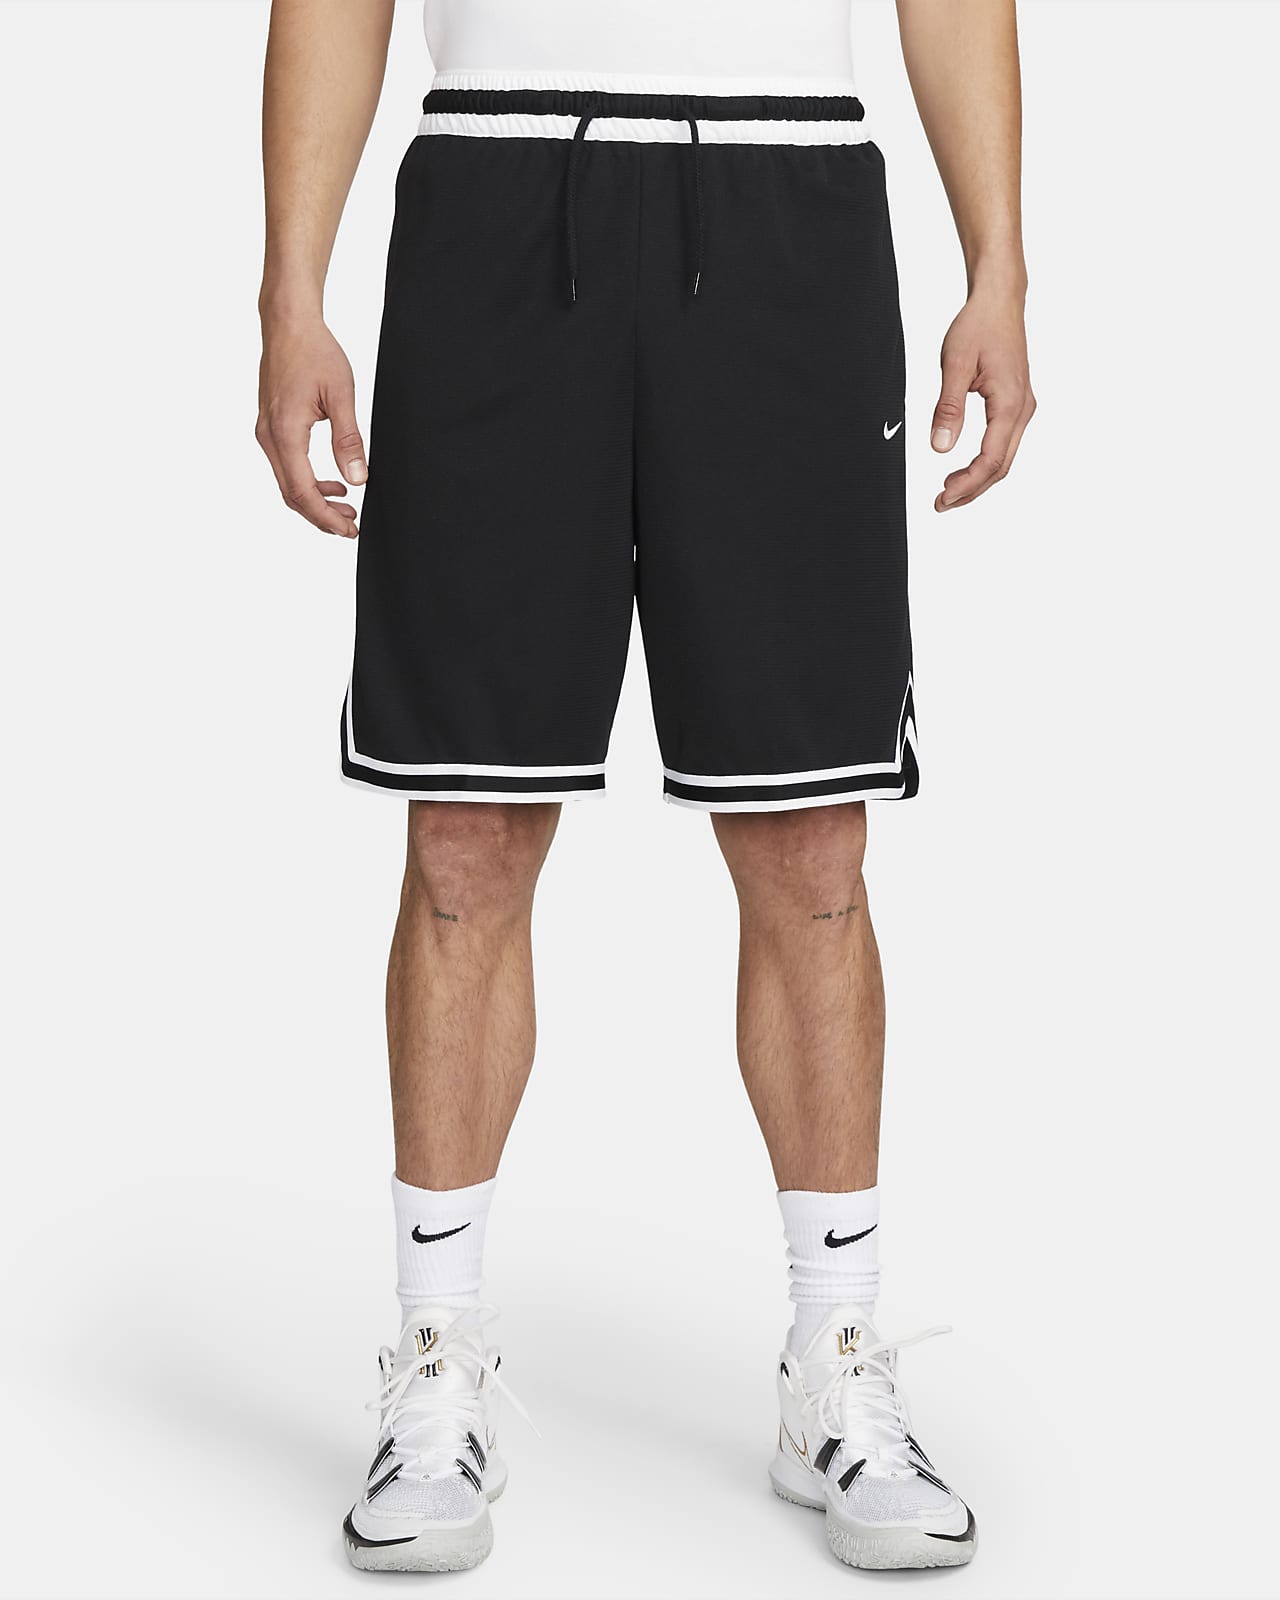 Chaussettes de basket-ball Nike Elite Dri-Fit chaussettes NBA. longueur  moyenne